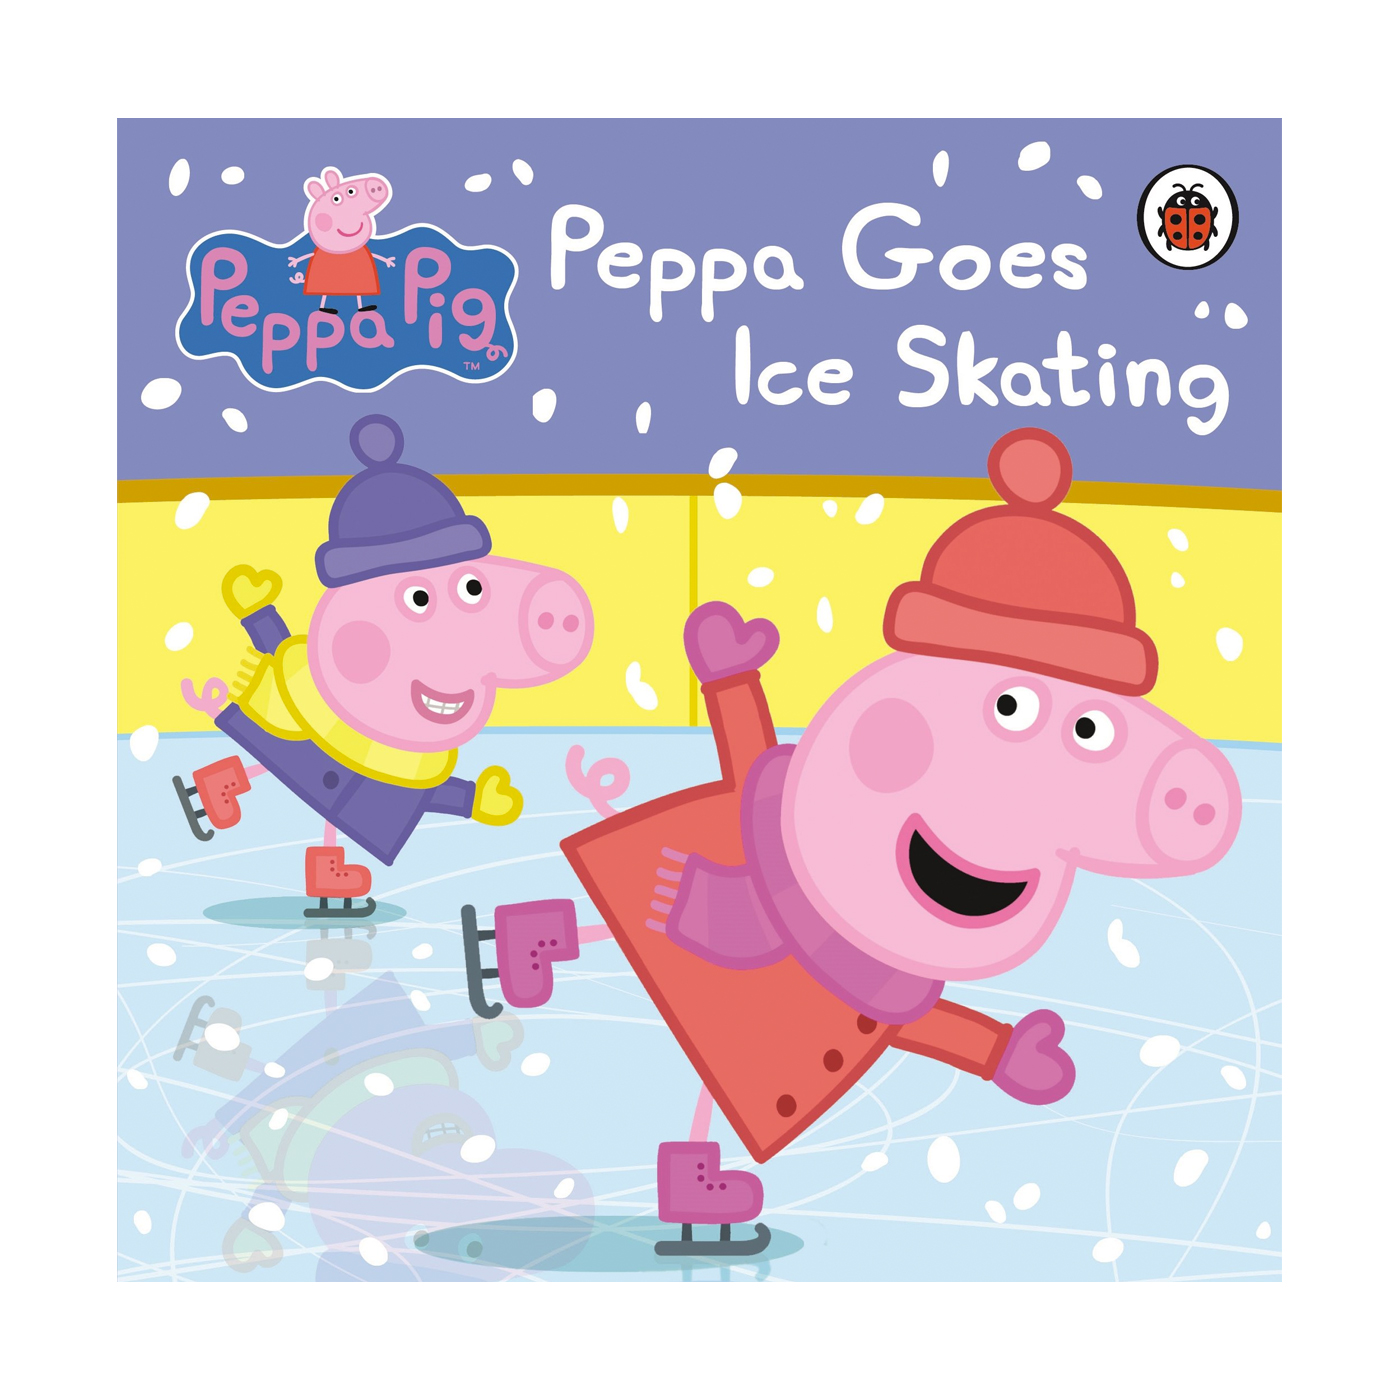  Peppa Pig: Peppa Goes Ice Skating